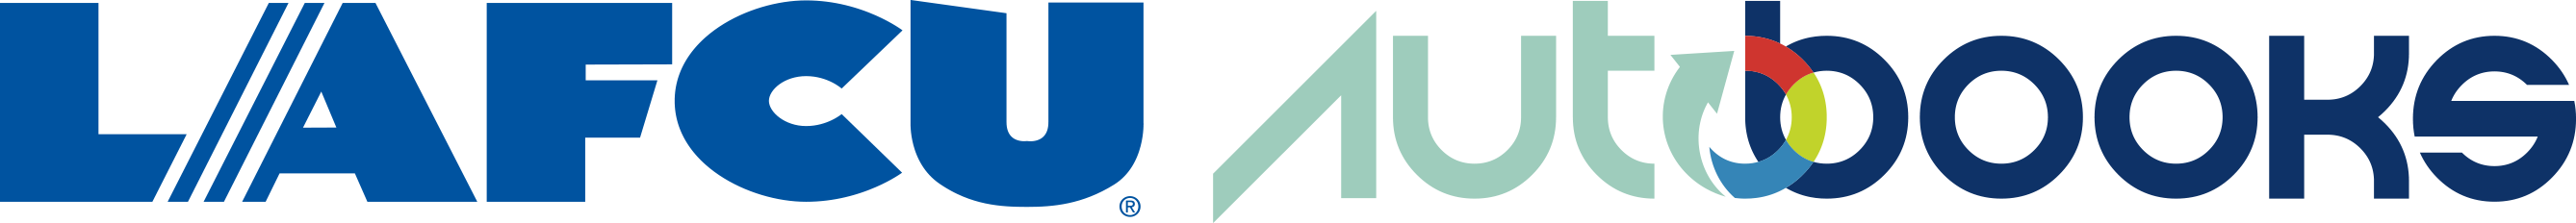 LAFCU/Autobooks Logo